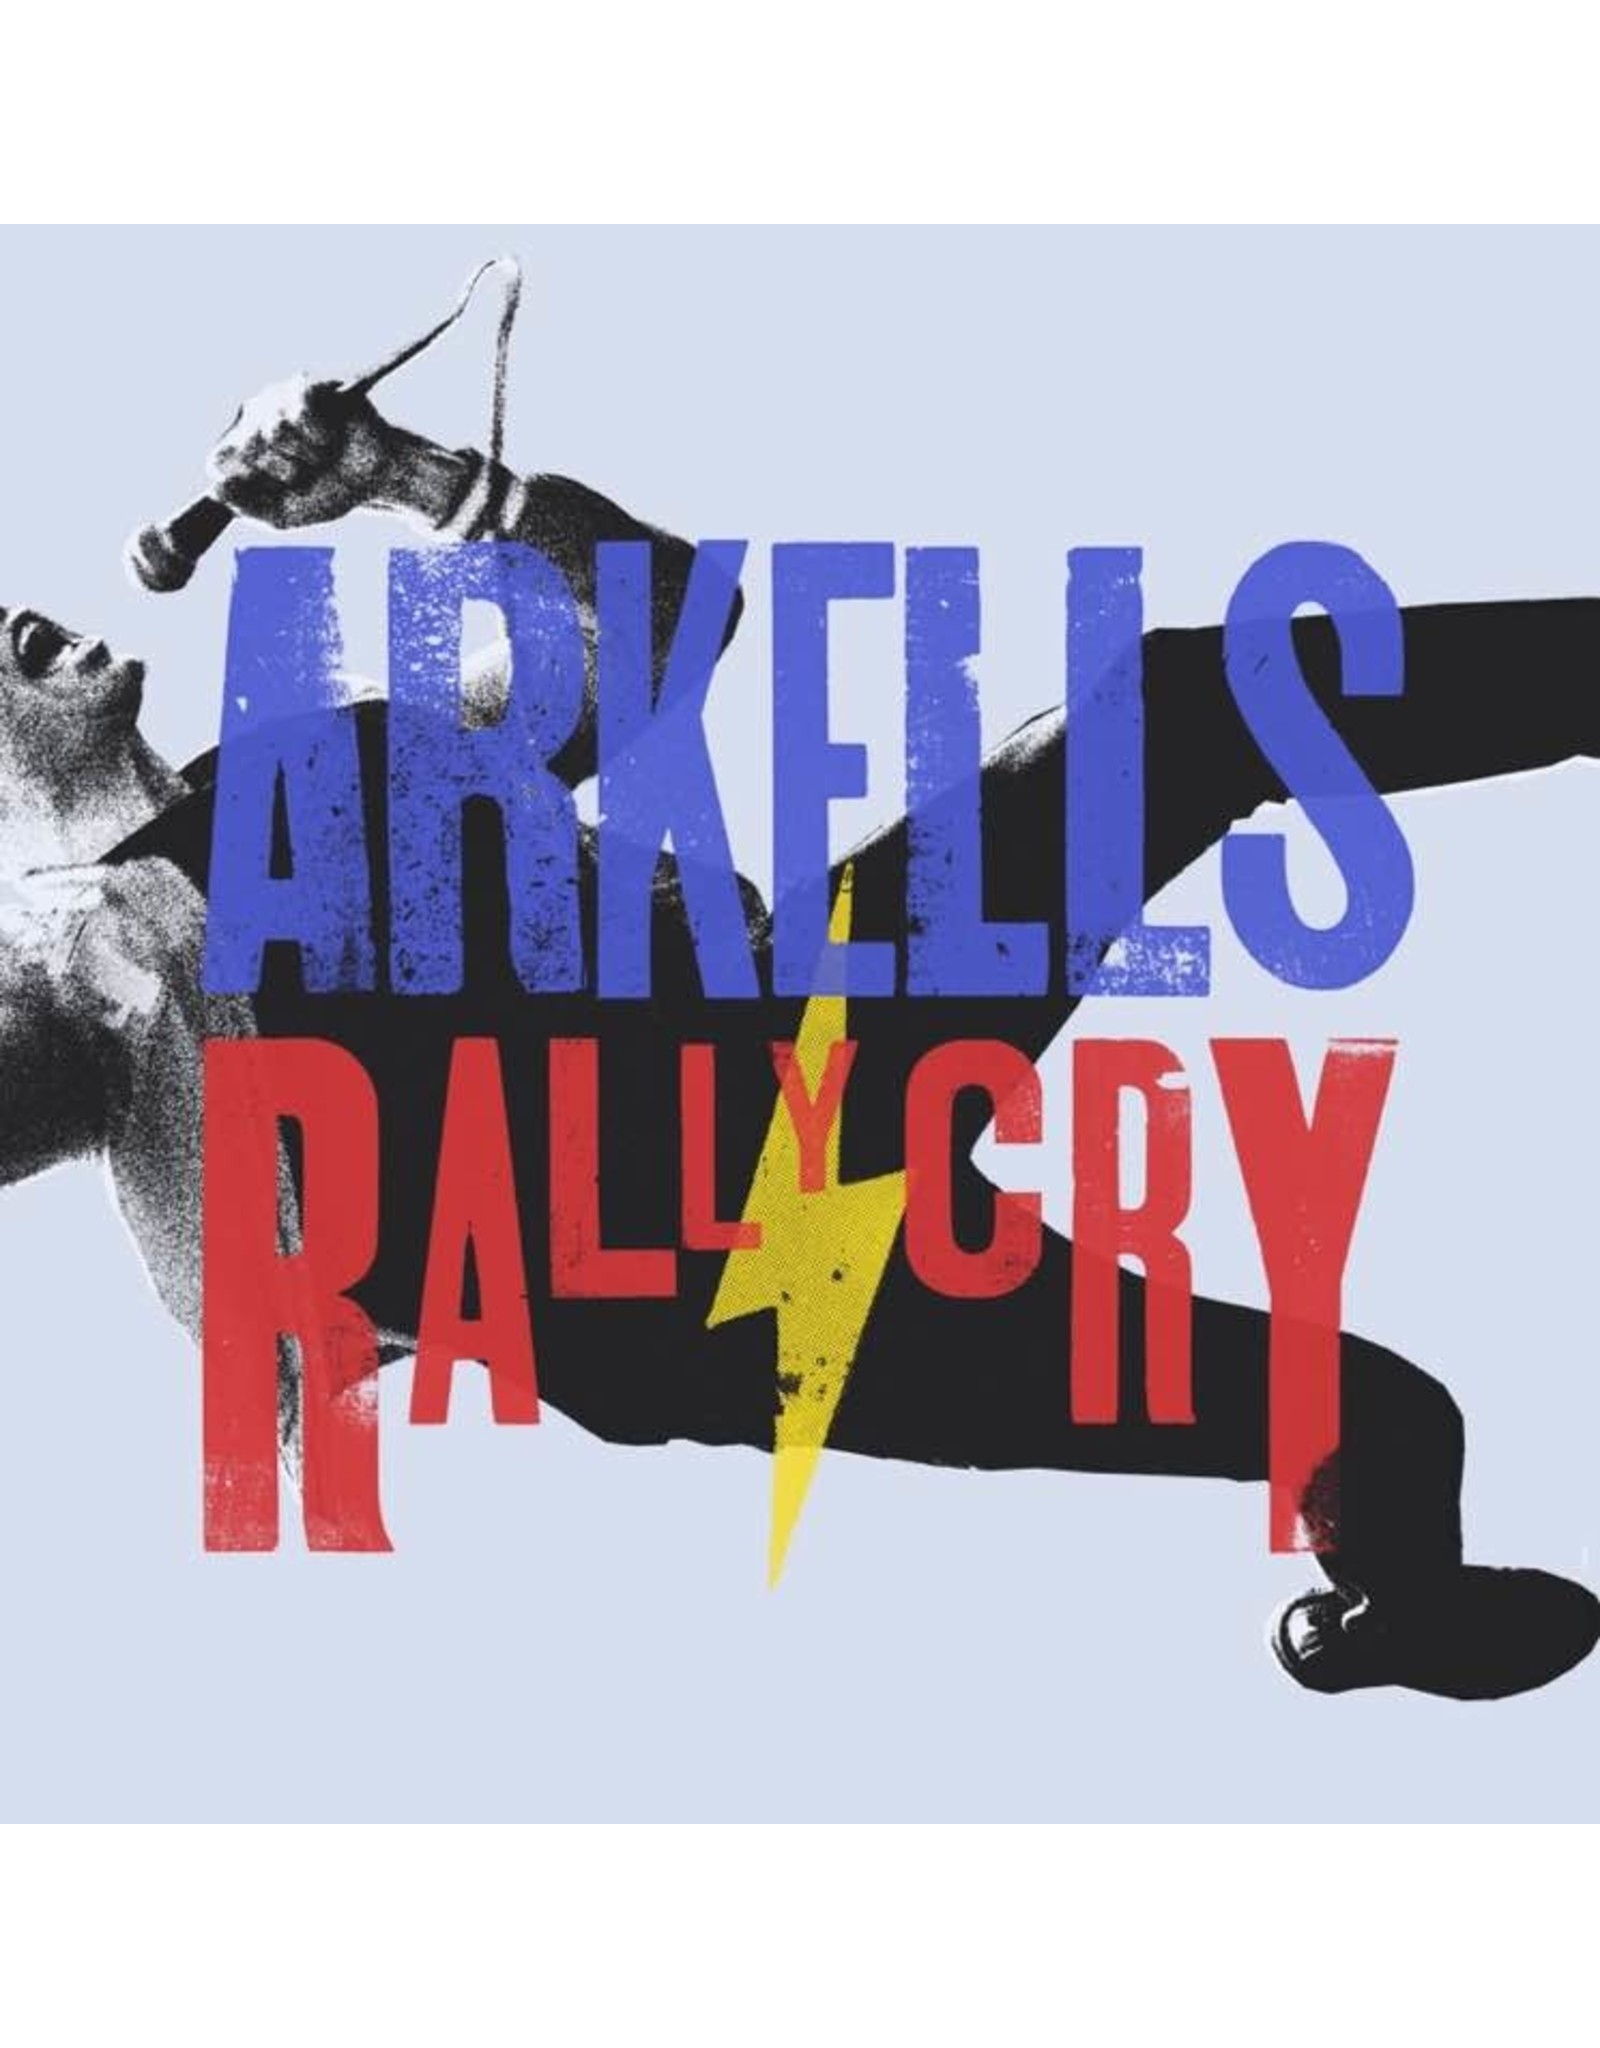 Arkells - Rally Cry (Yellow Vinyl)